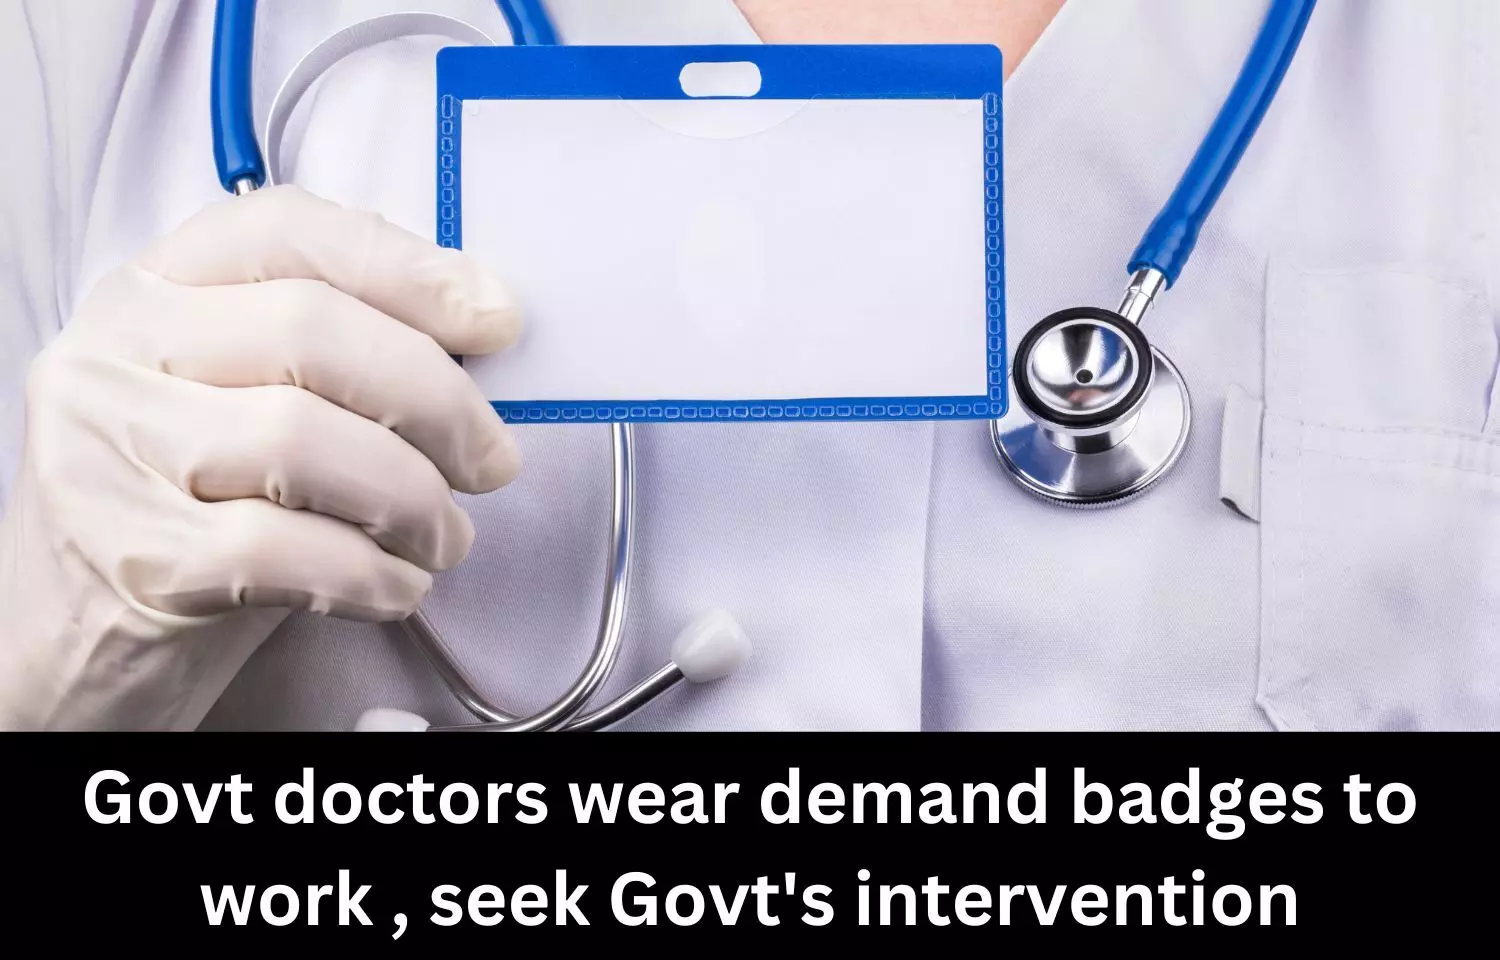 Chennai: Govt doctors wear Demand badges to work